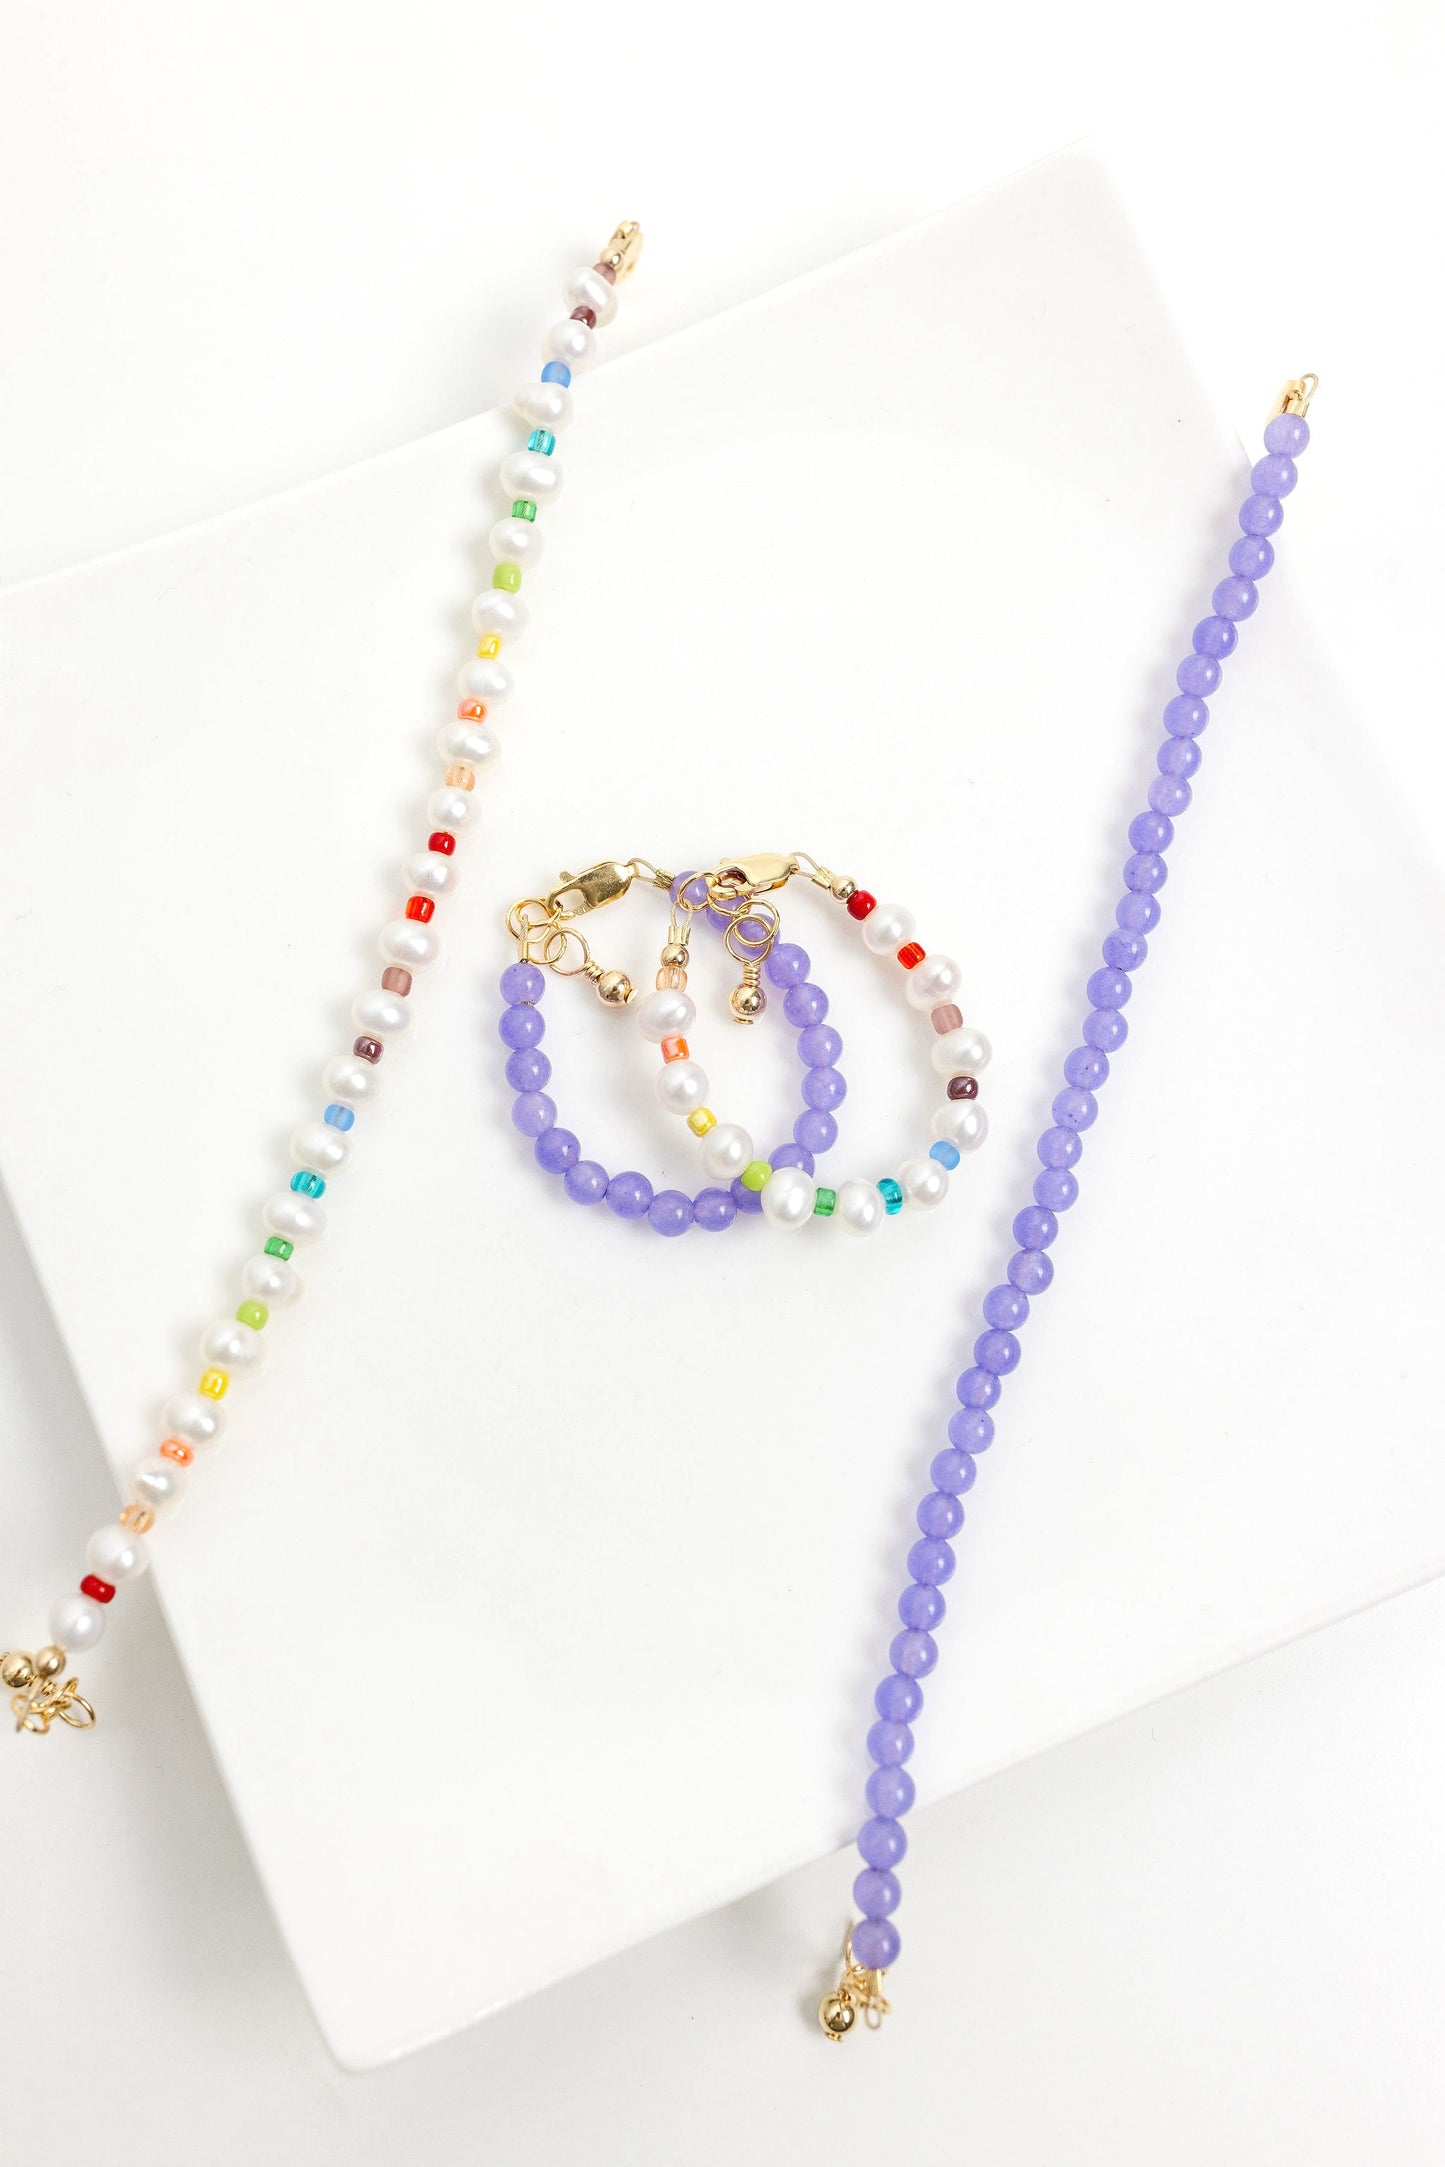 Grape Bracelet (4MM Beads)